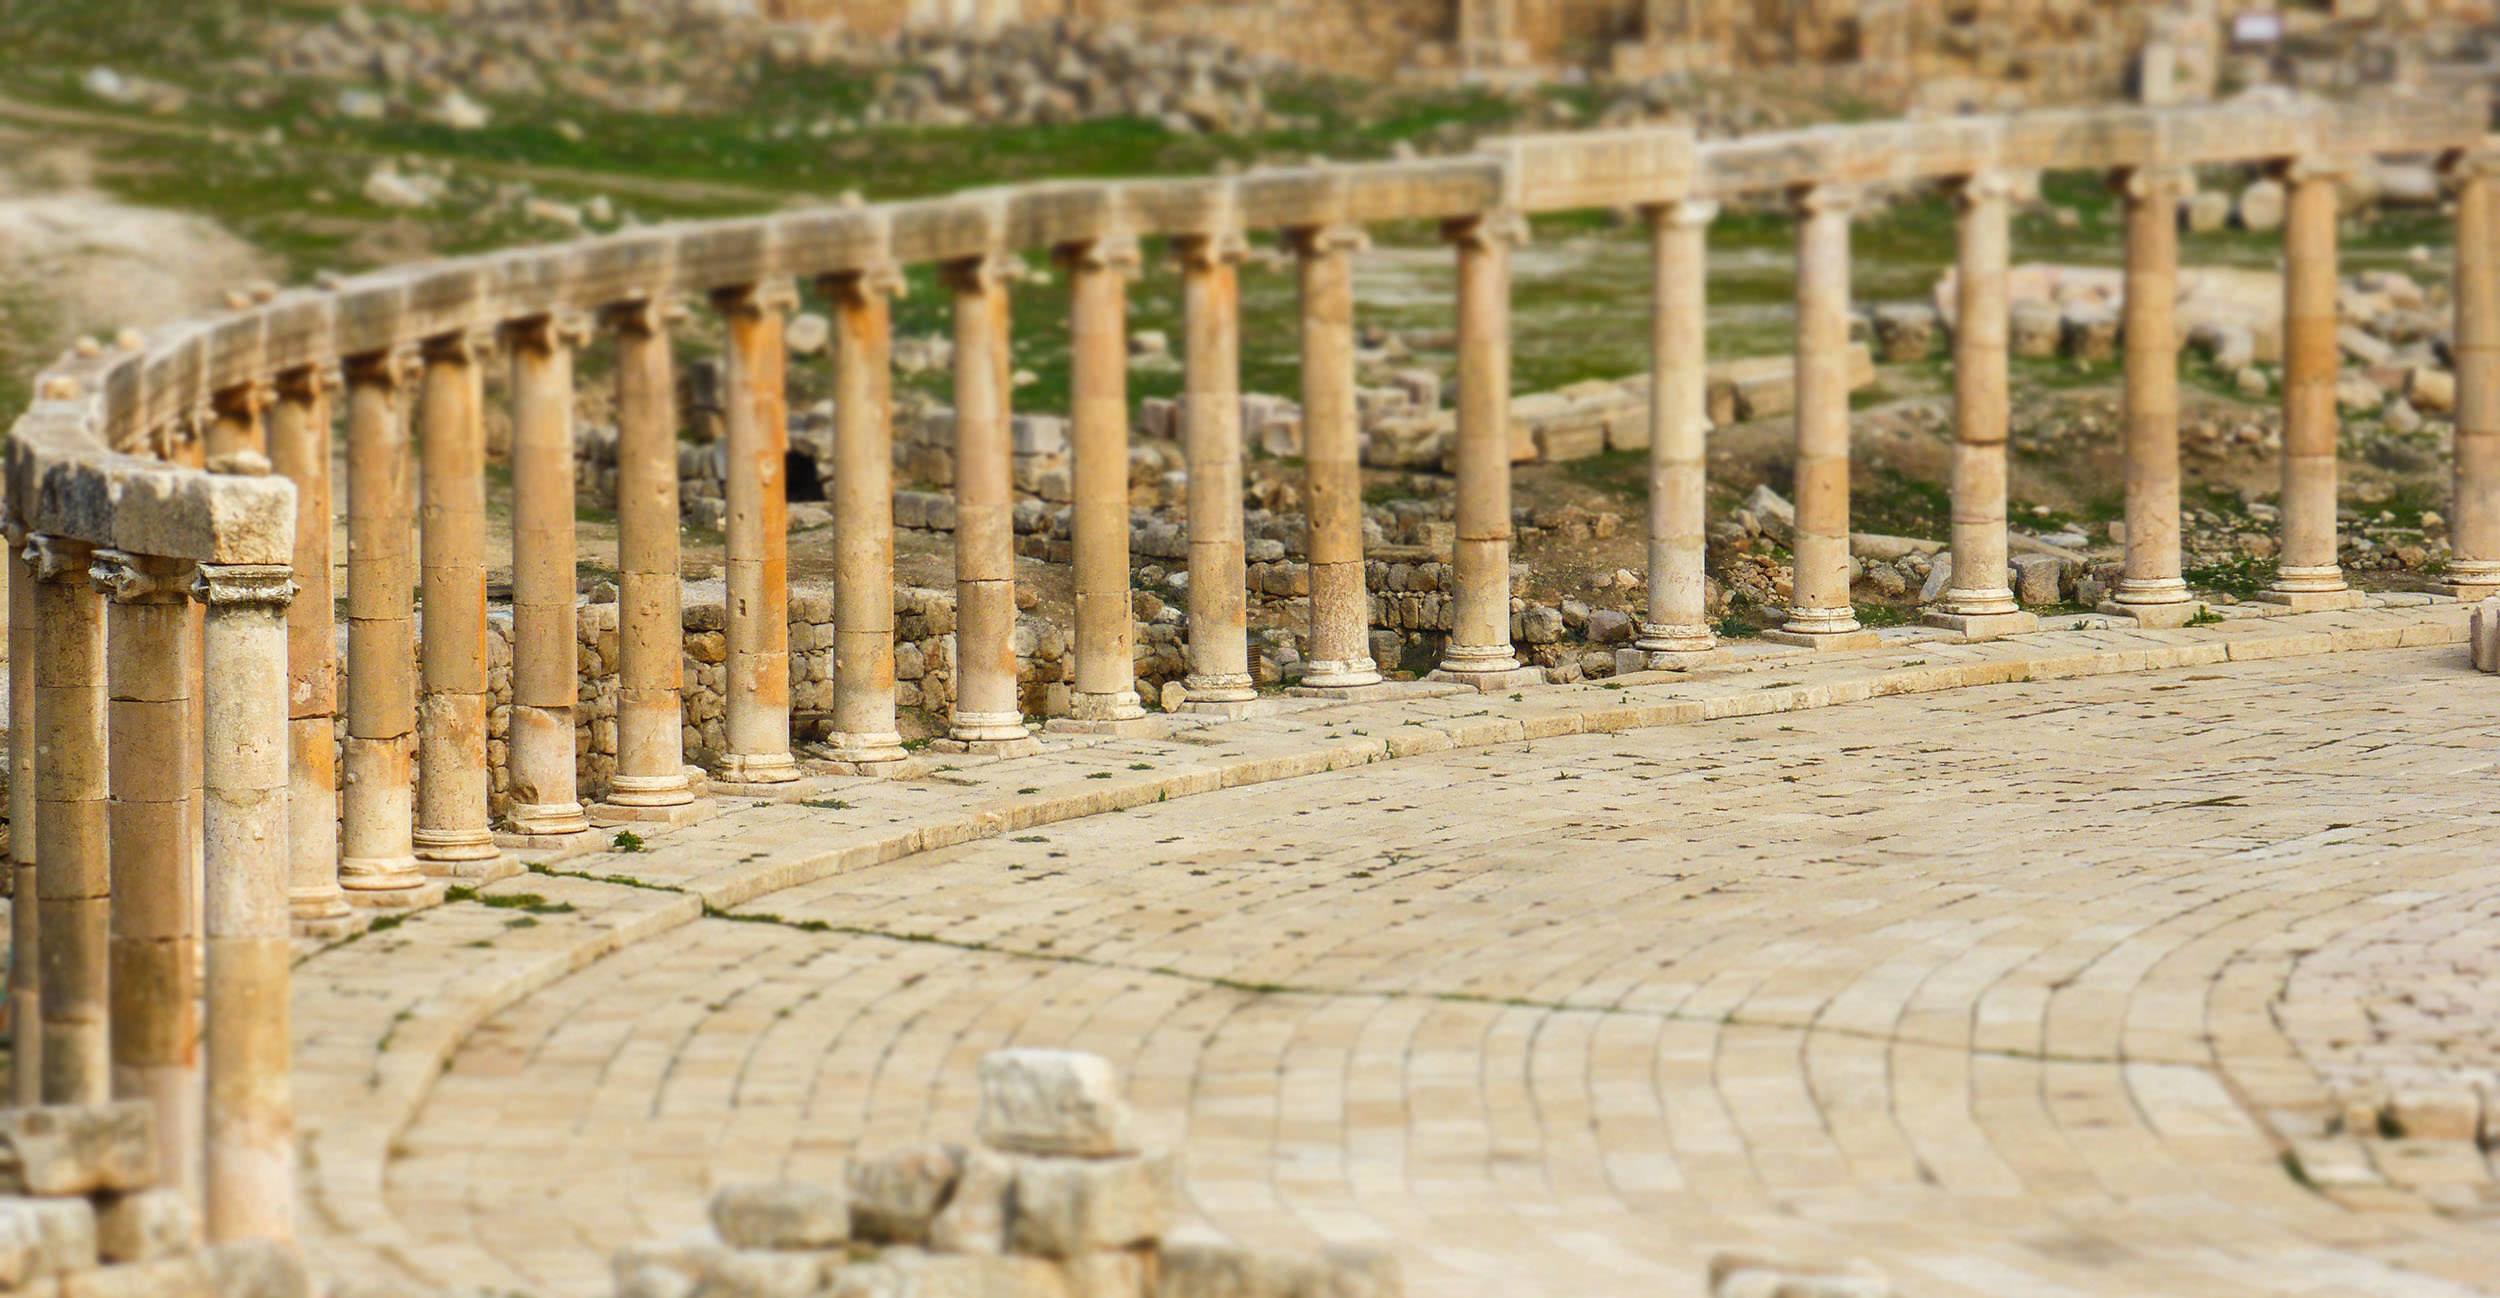 Joined columns of the Forum (Oval Plaza) at Jerash Jordan